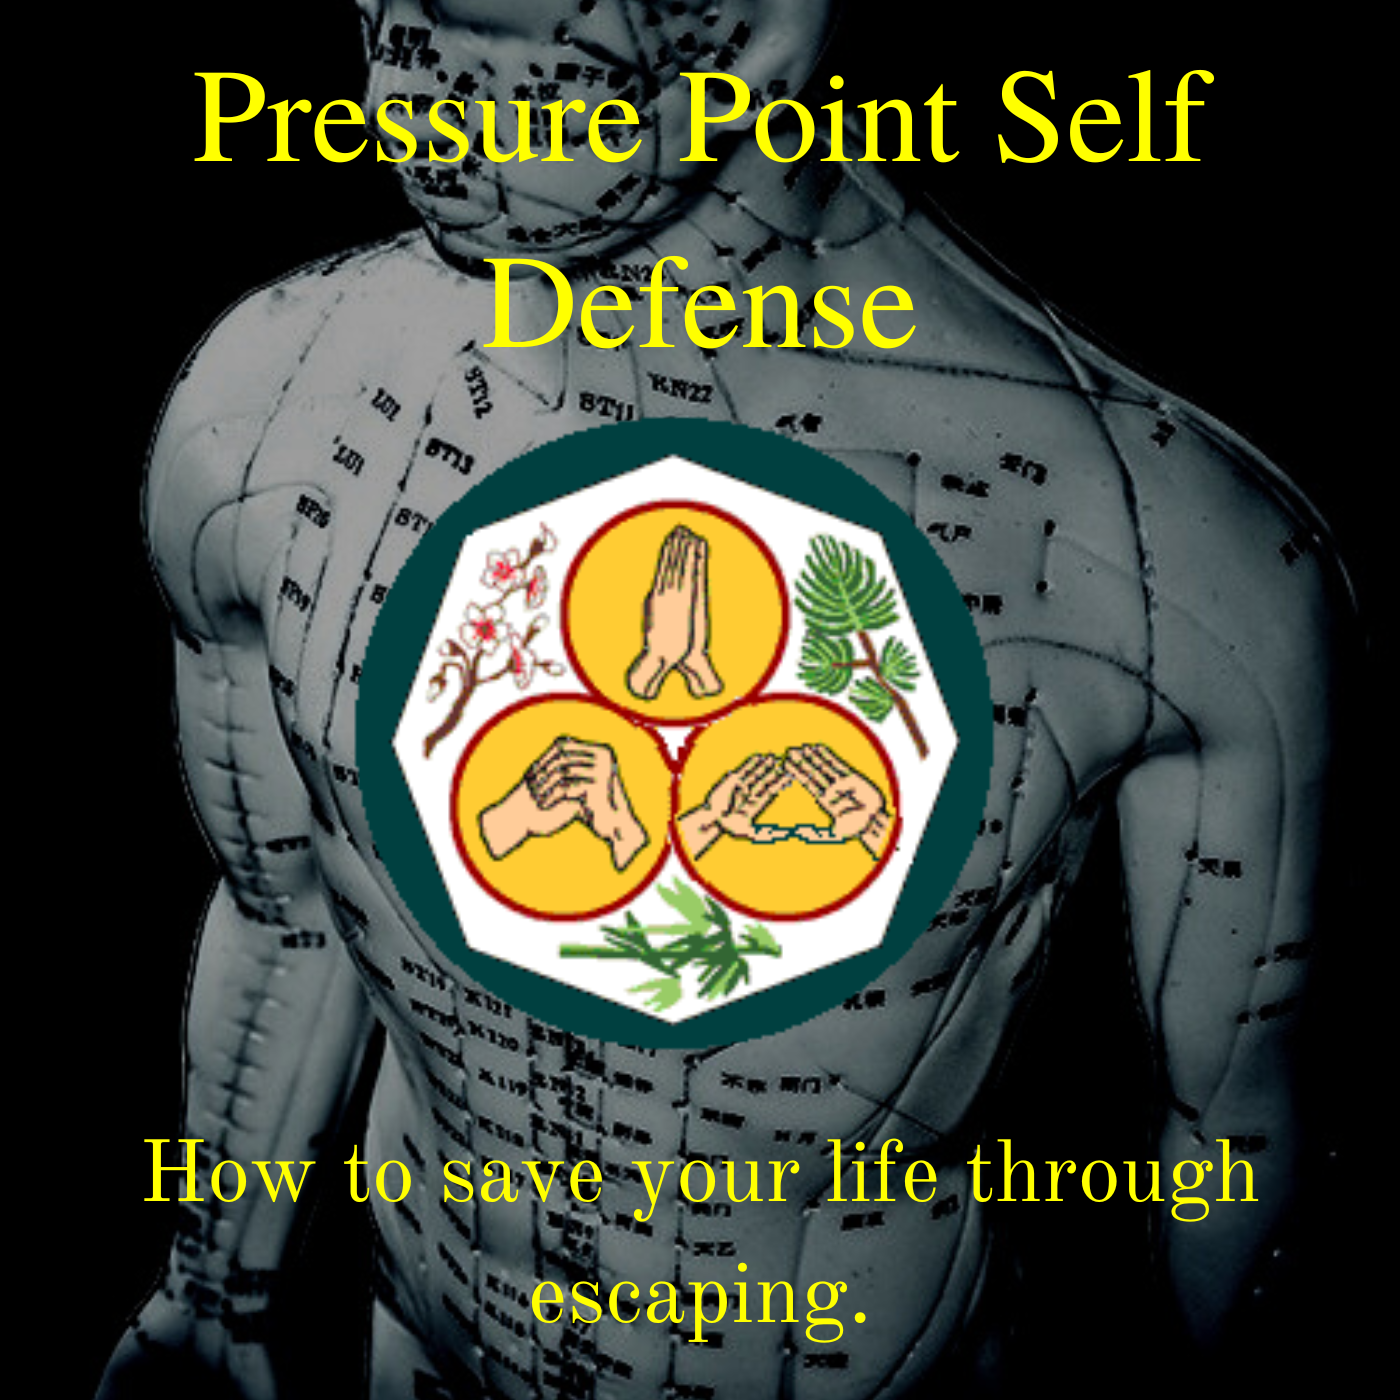 * Pressure Point Self Defense